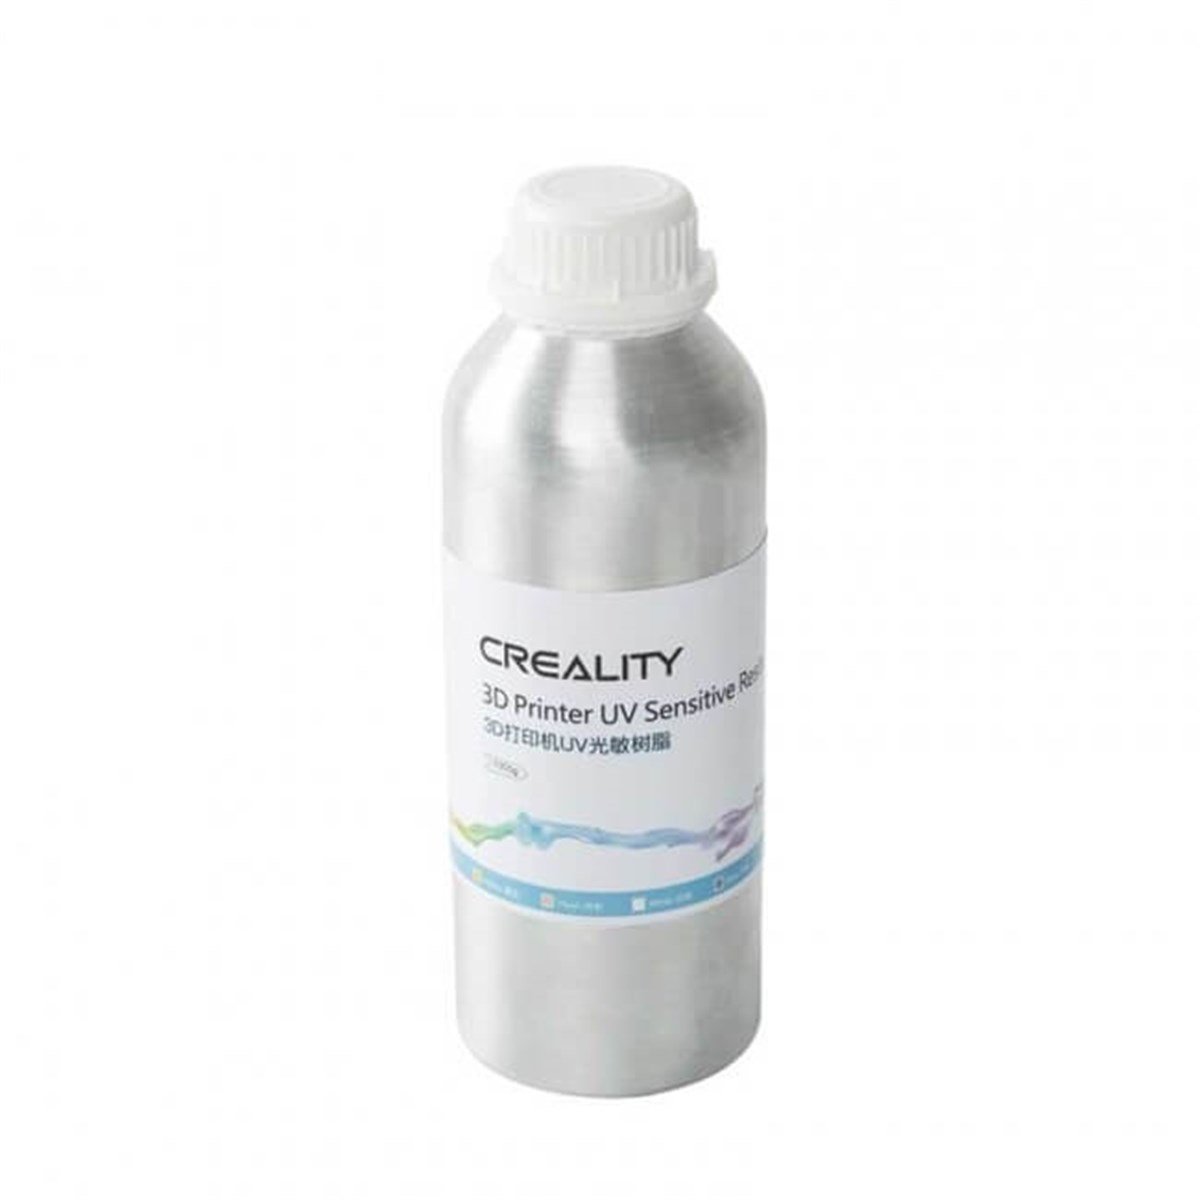 Creality Turuncu UV Reçine 1 Kg - SLA